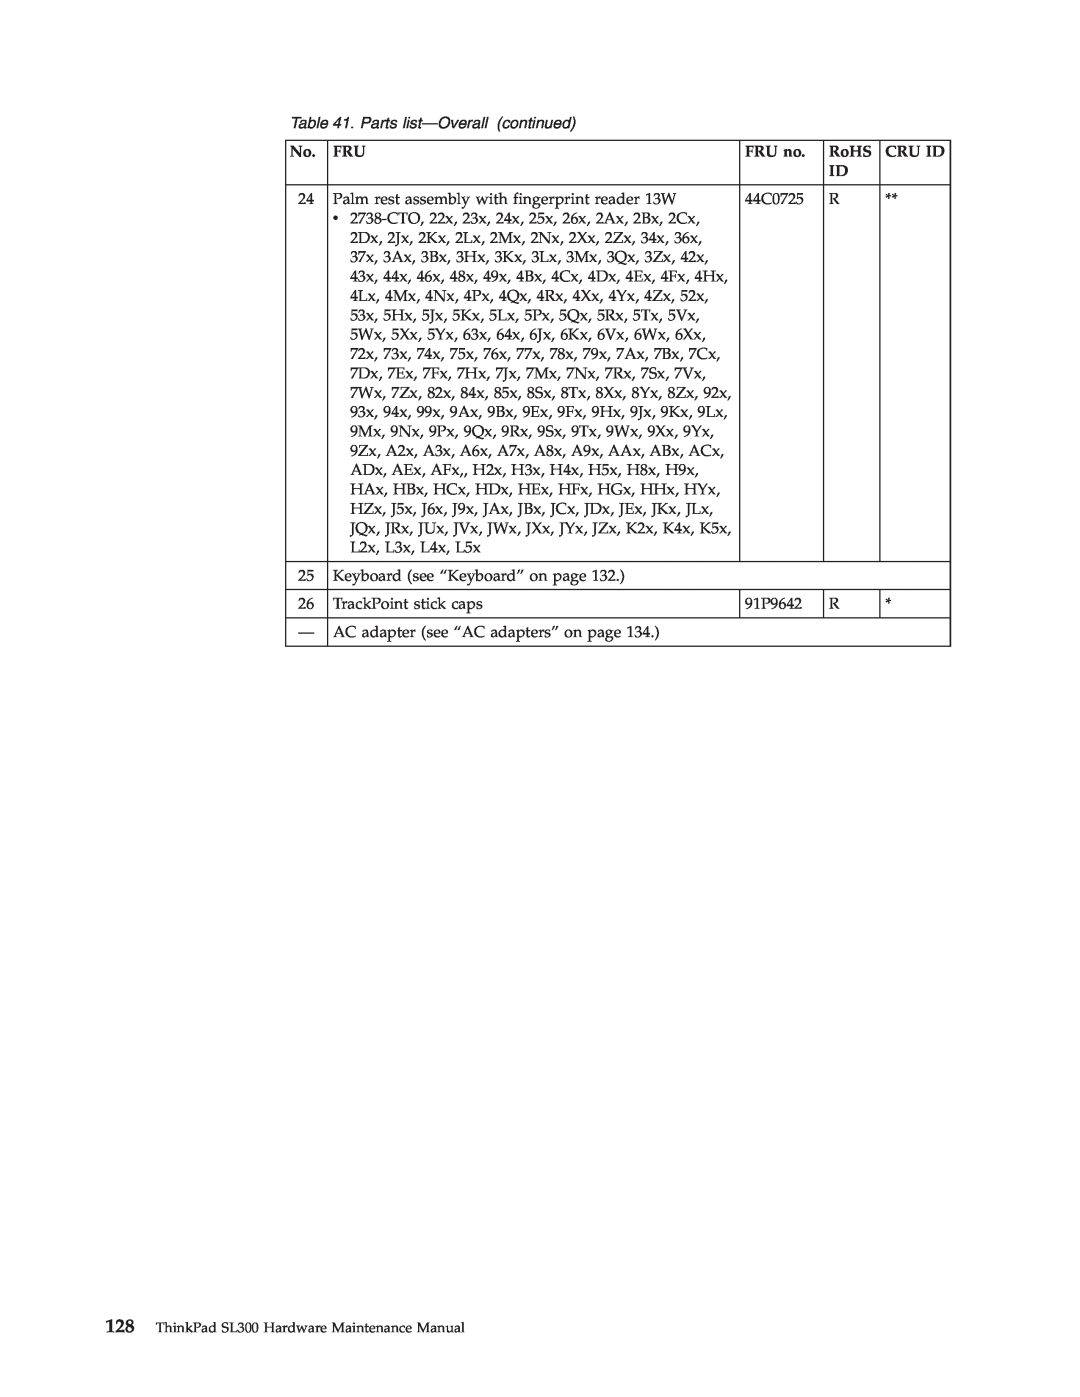 Lenovo manual Parts list-Overall continued, FRU no, RoHS, Cru Id, ThinkPad SL300 Hardware Maintenance Manual 